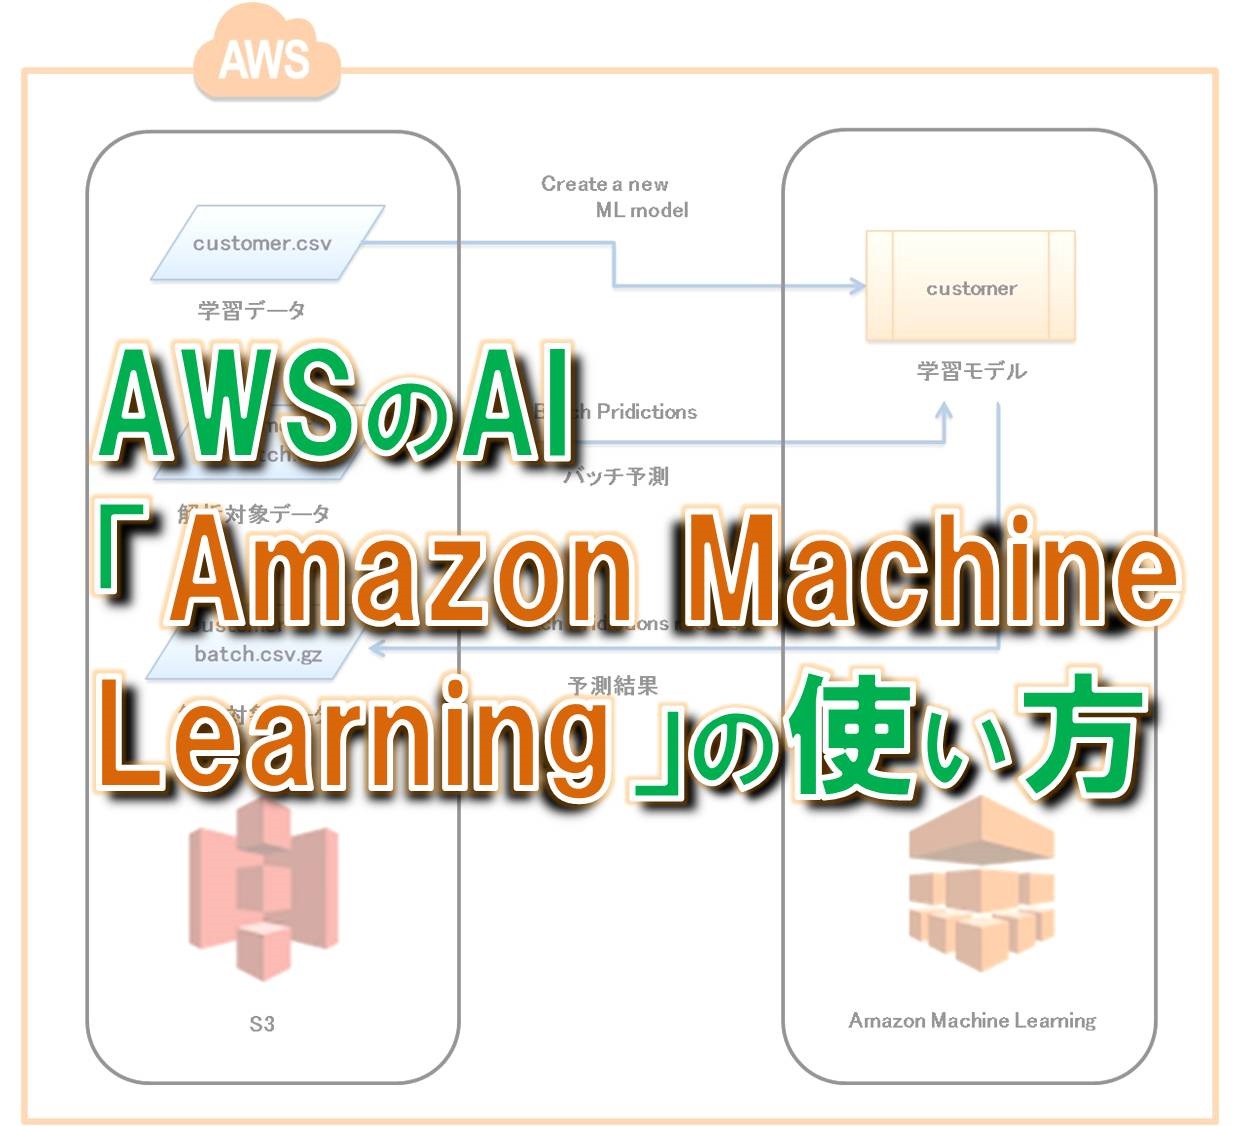 AWSの人工知能アプリケーション「Amazon Machine Learning」の使い方